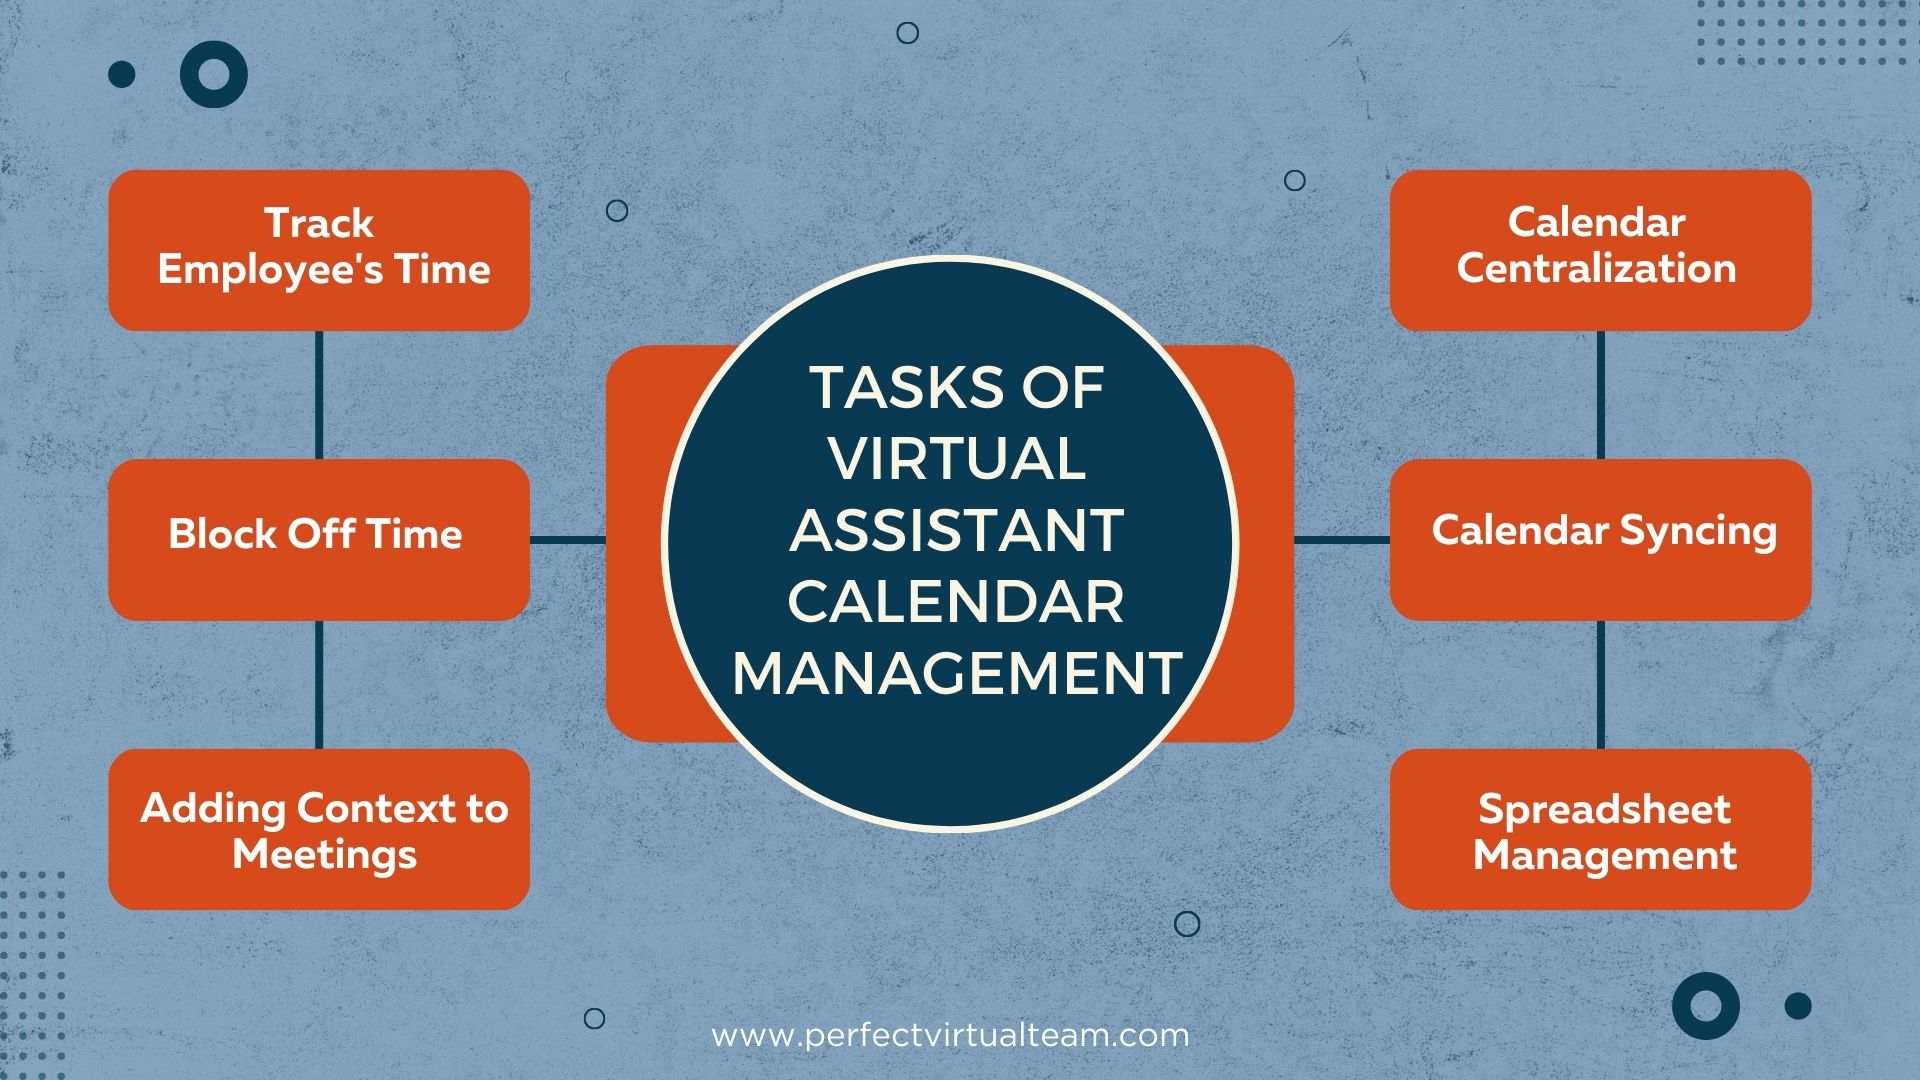 Tasks of Virtual Assistant Calendar Management